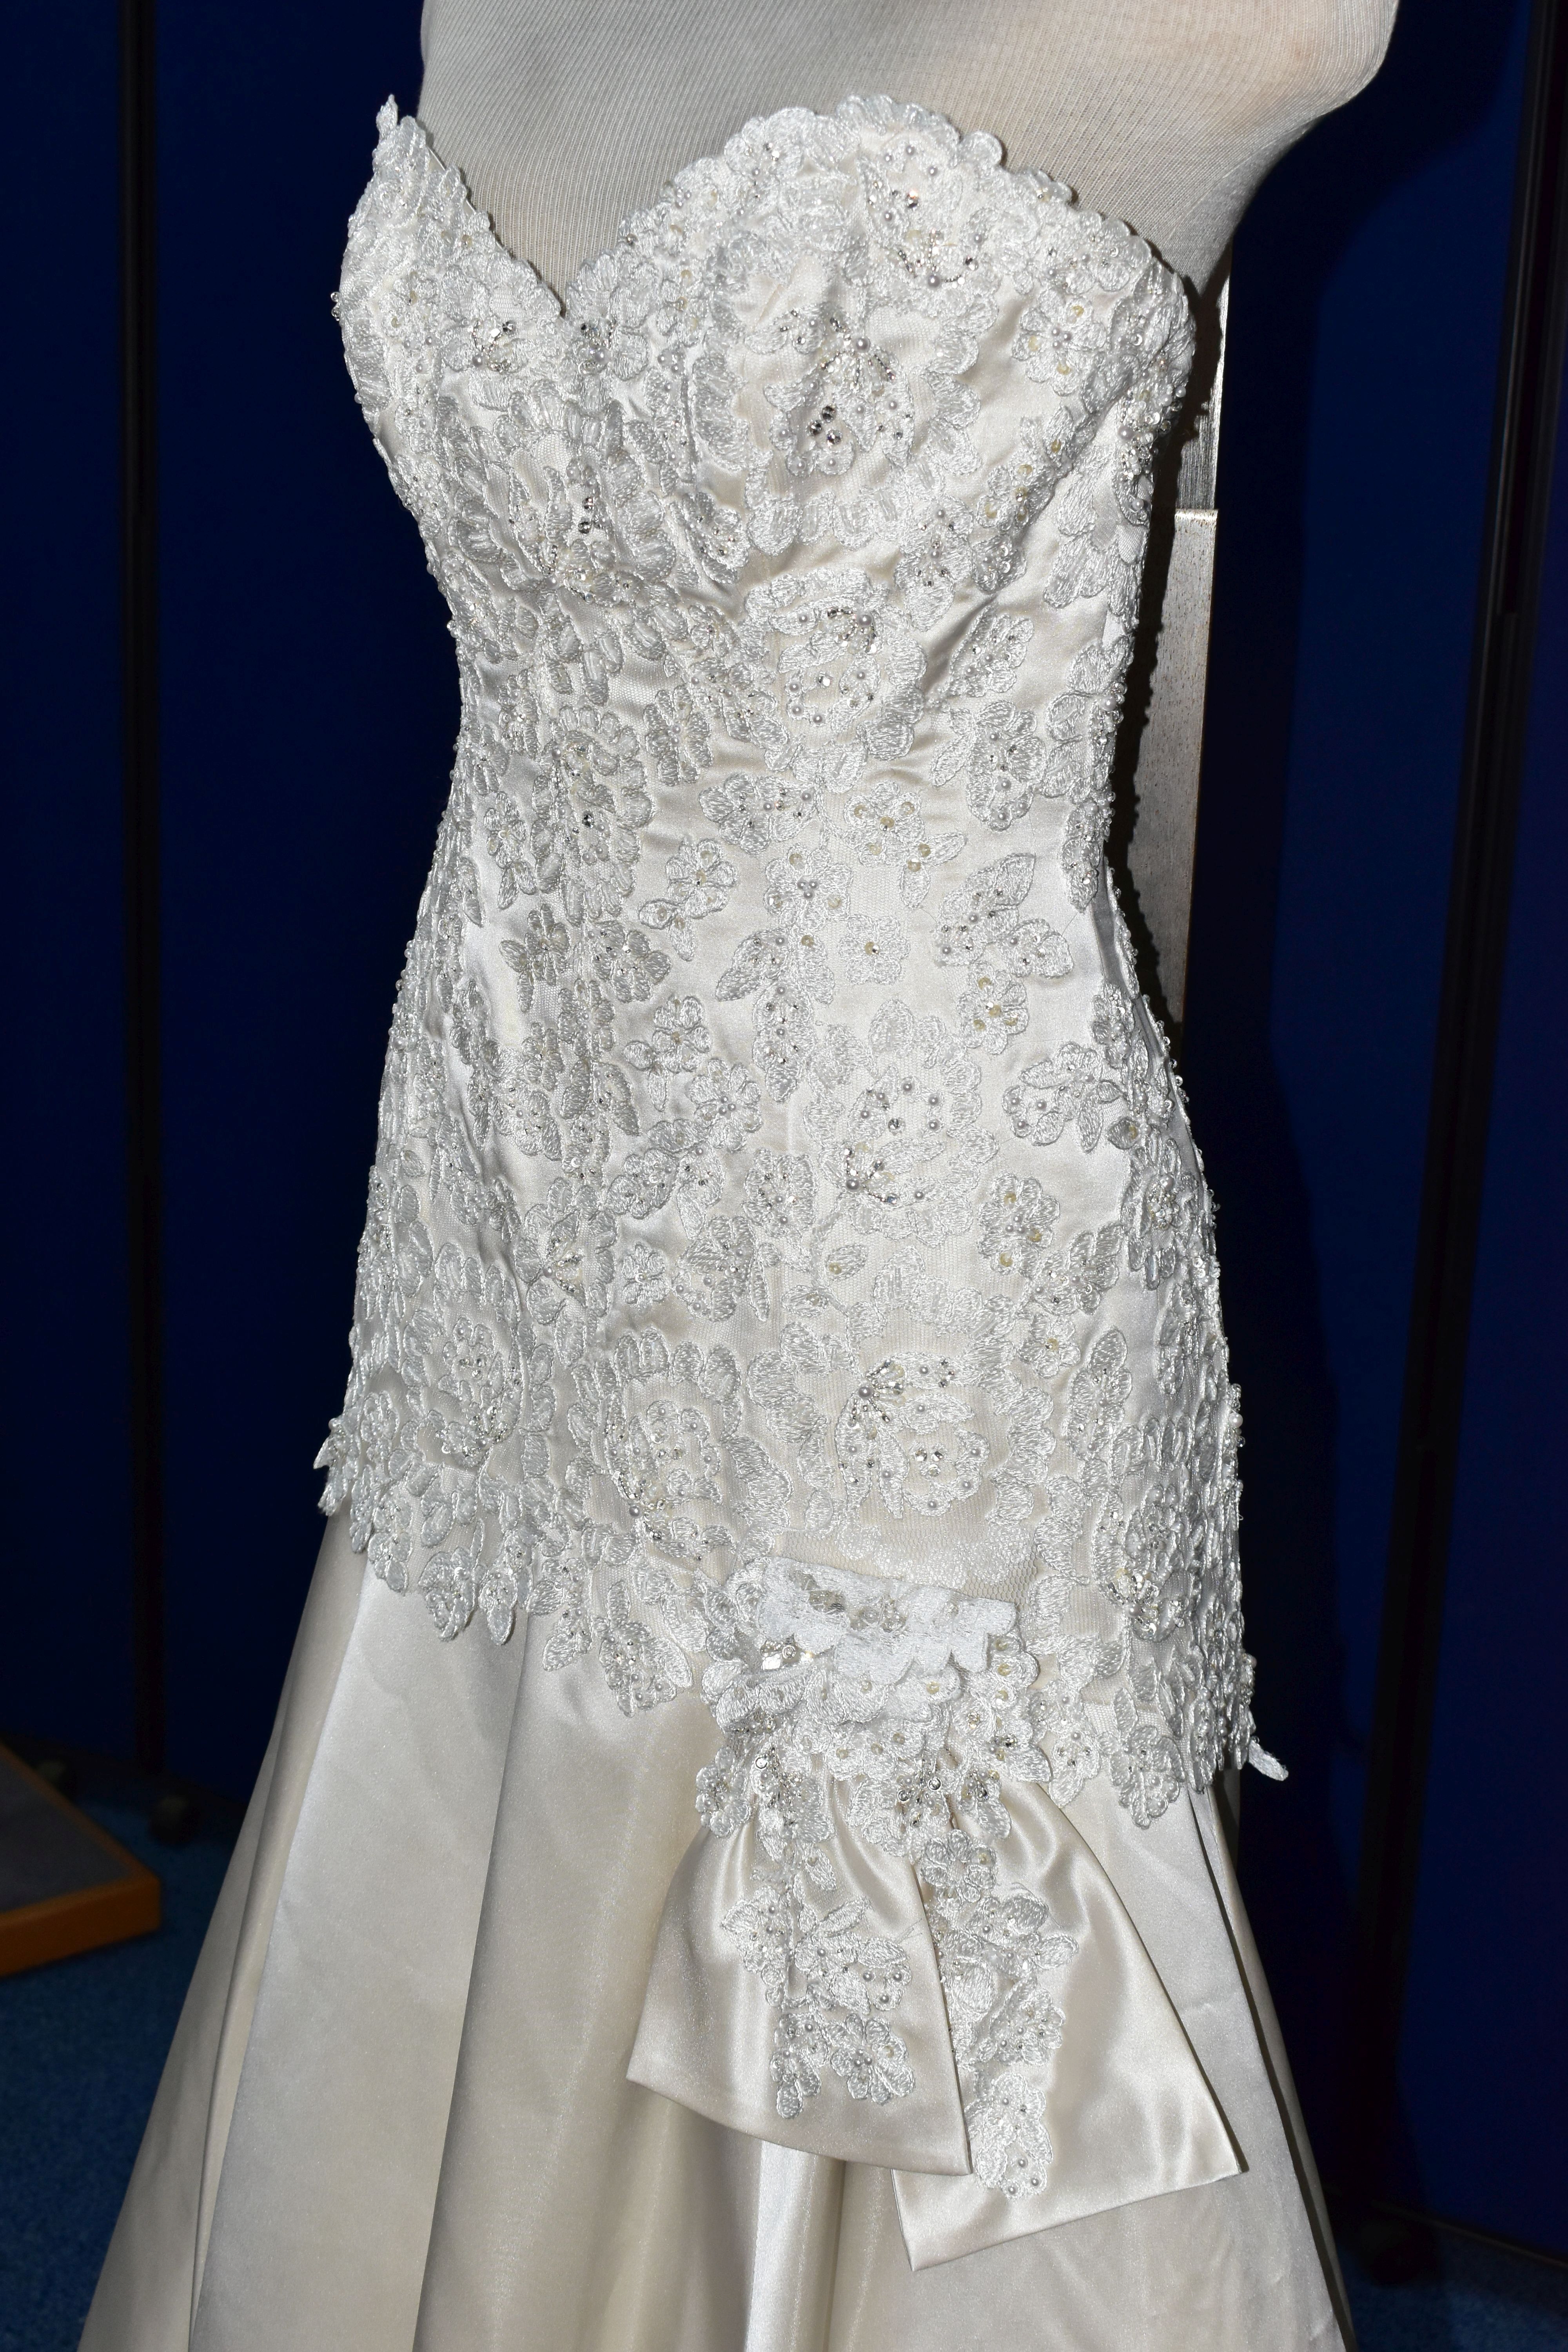 WEDDING DRESS, 'David Tutera' champagne, size 6, satin, strapless, beaded appliques (1) - Image 7 of 10